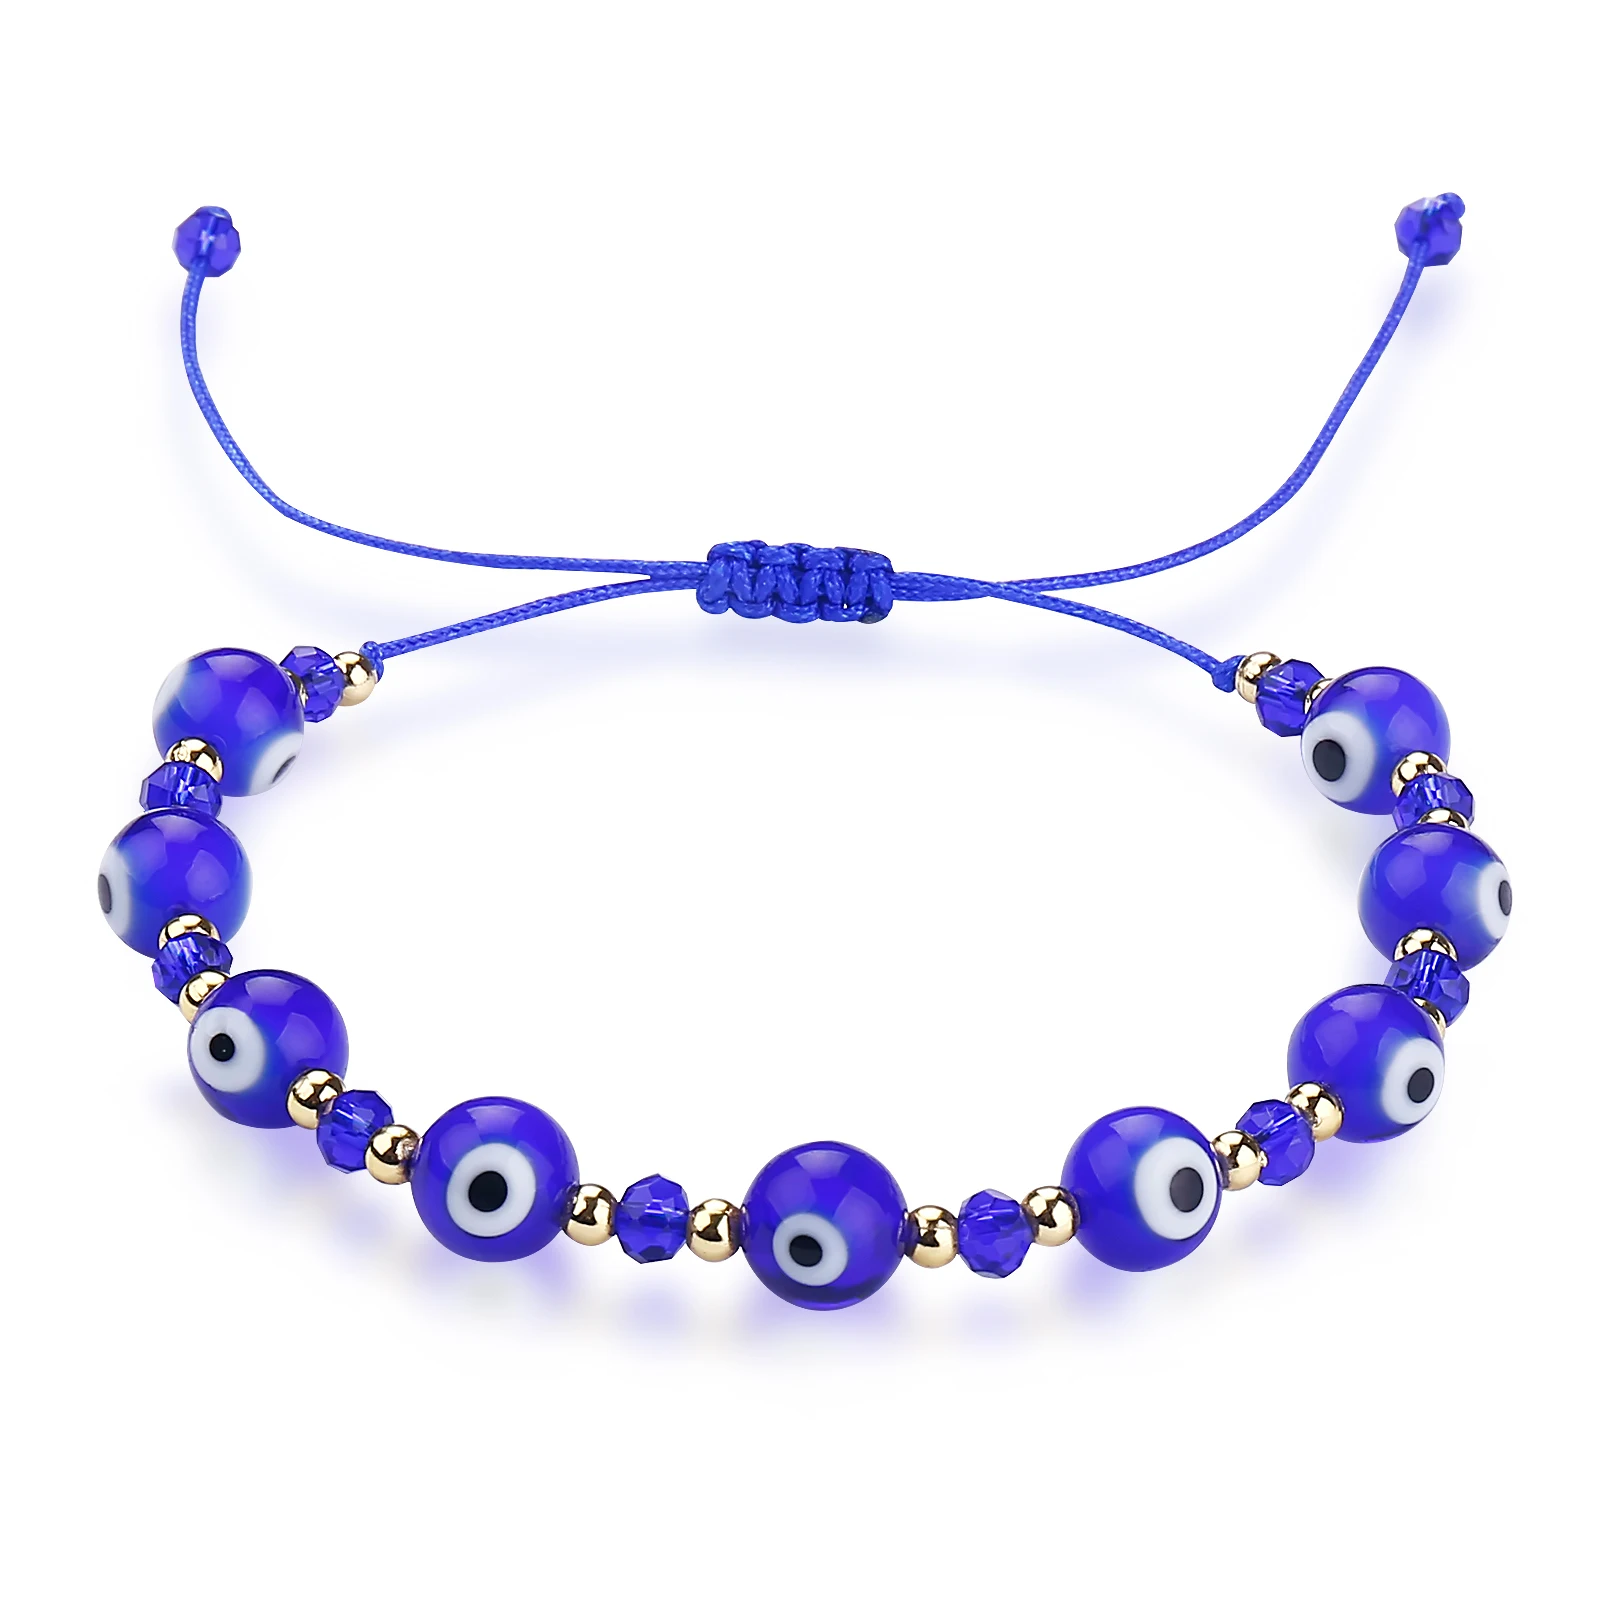 

2022 New Turkish Lucky Bracelets Evil Blue Eye Bead Bracelet Men Women Handmade Braided Lucky Jewelry Charm Bracelet, Picture shows